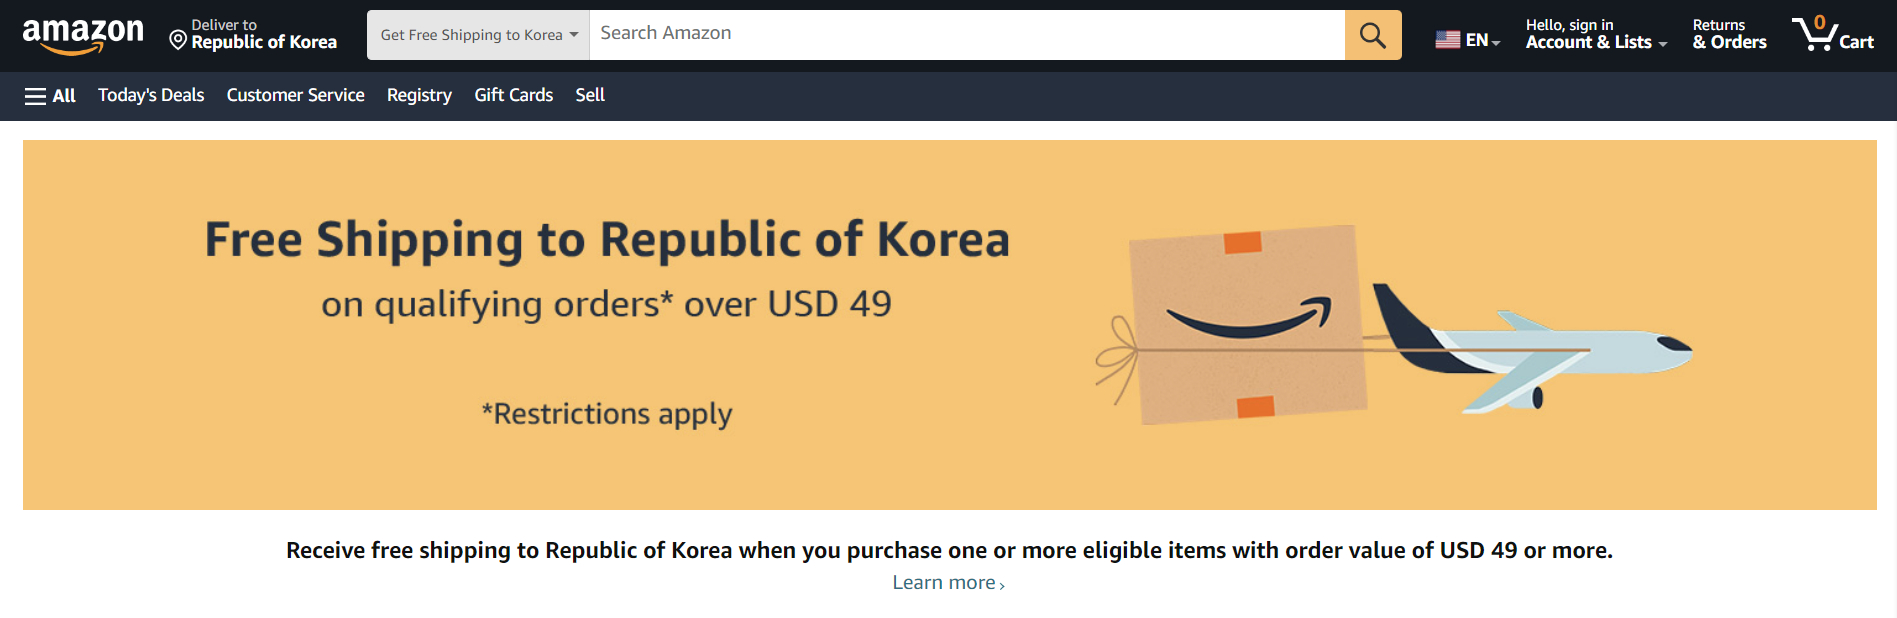 Amazon's website announces free shipping to Korea. [SCREEN CAPTURE]